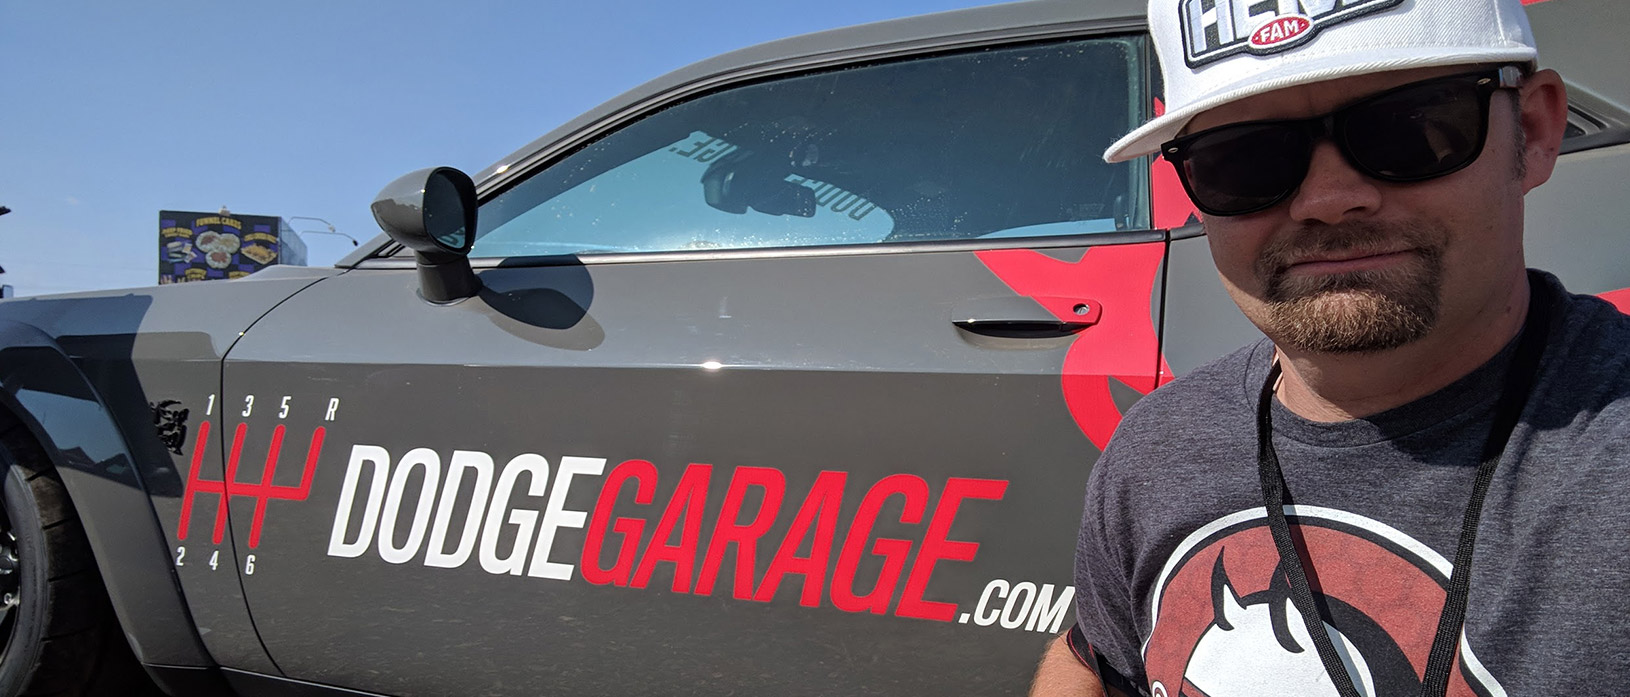 man taking a selfie with Dodge Garage promo challenger